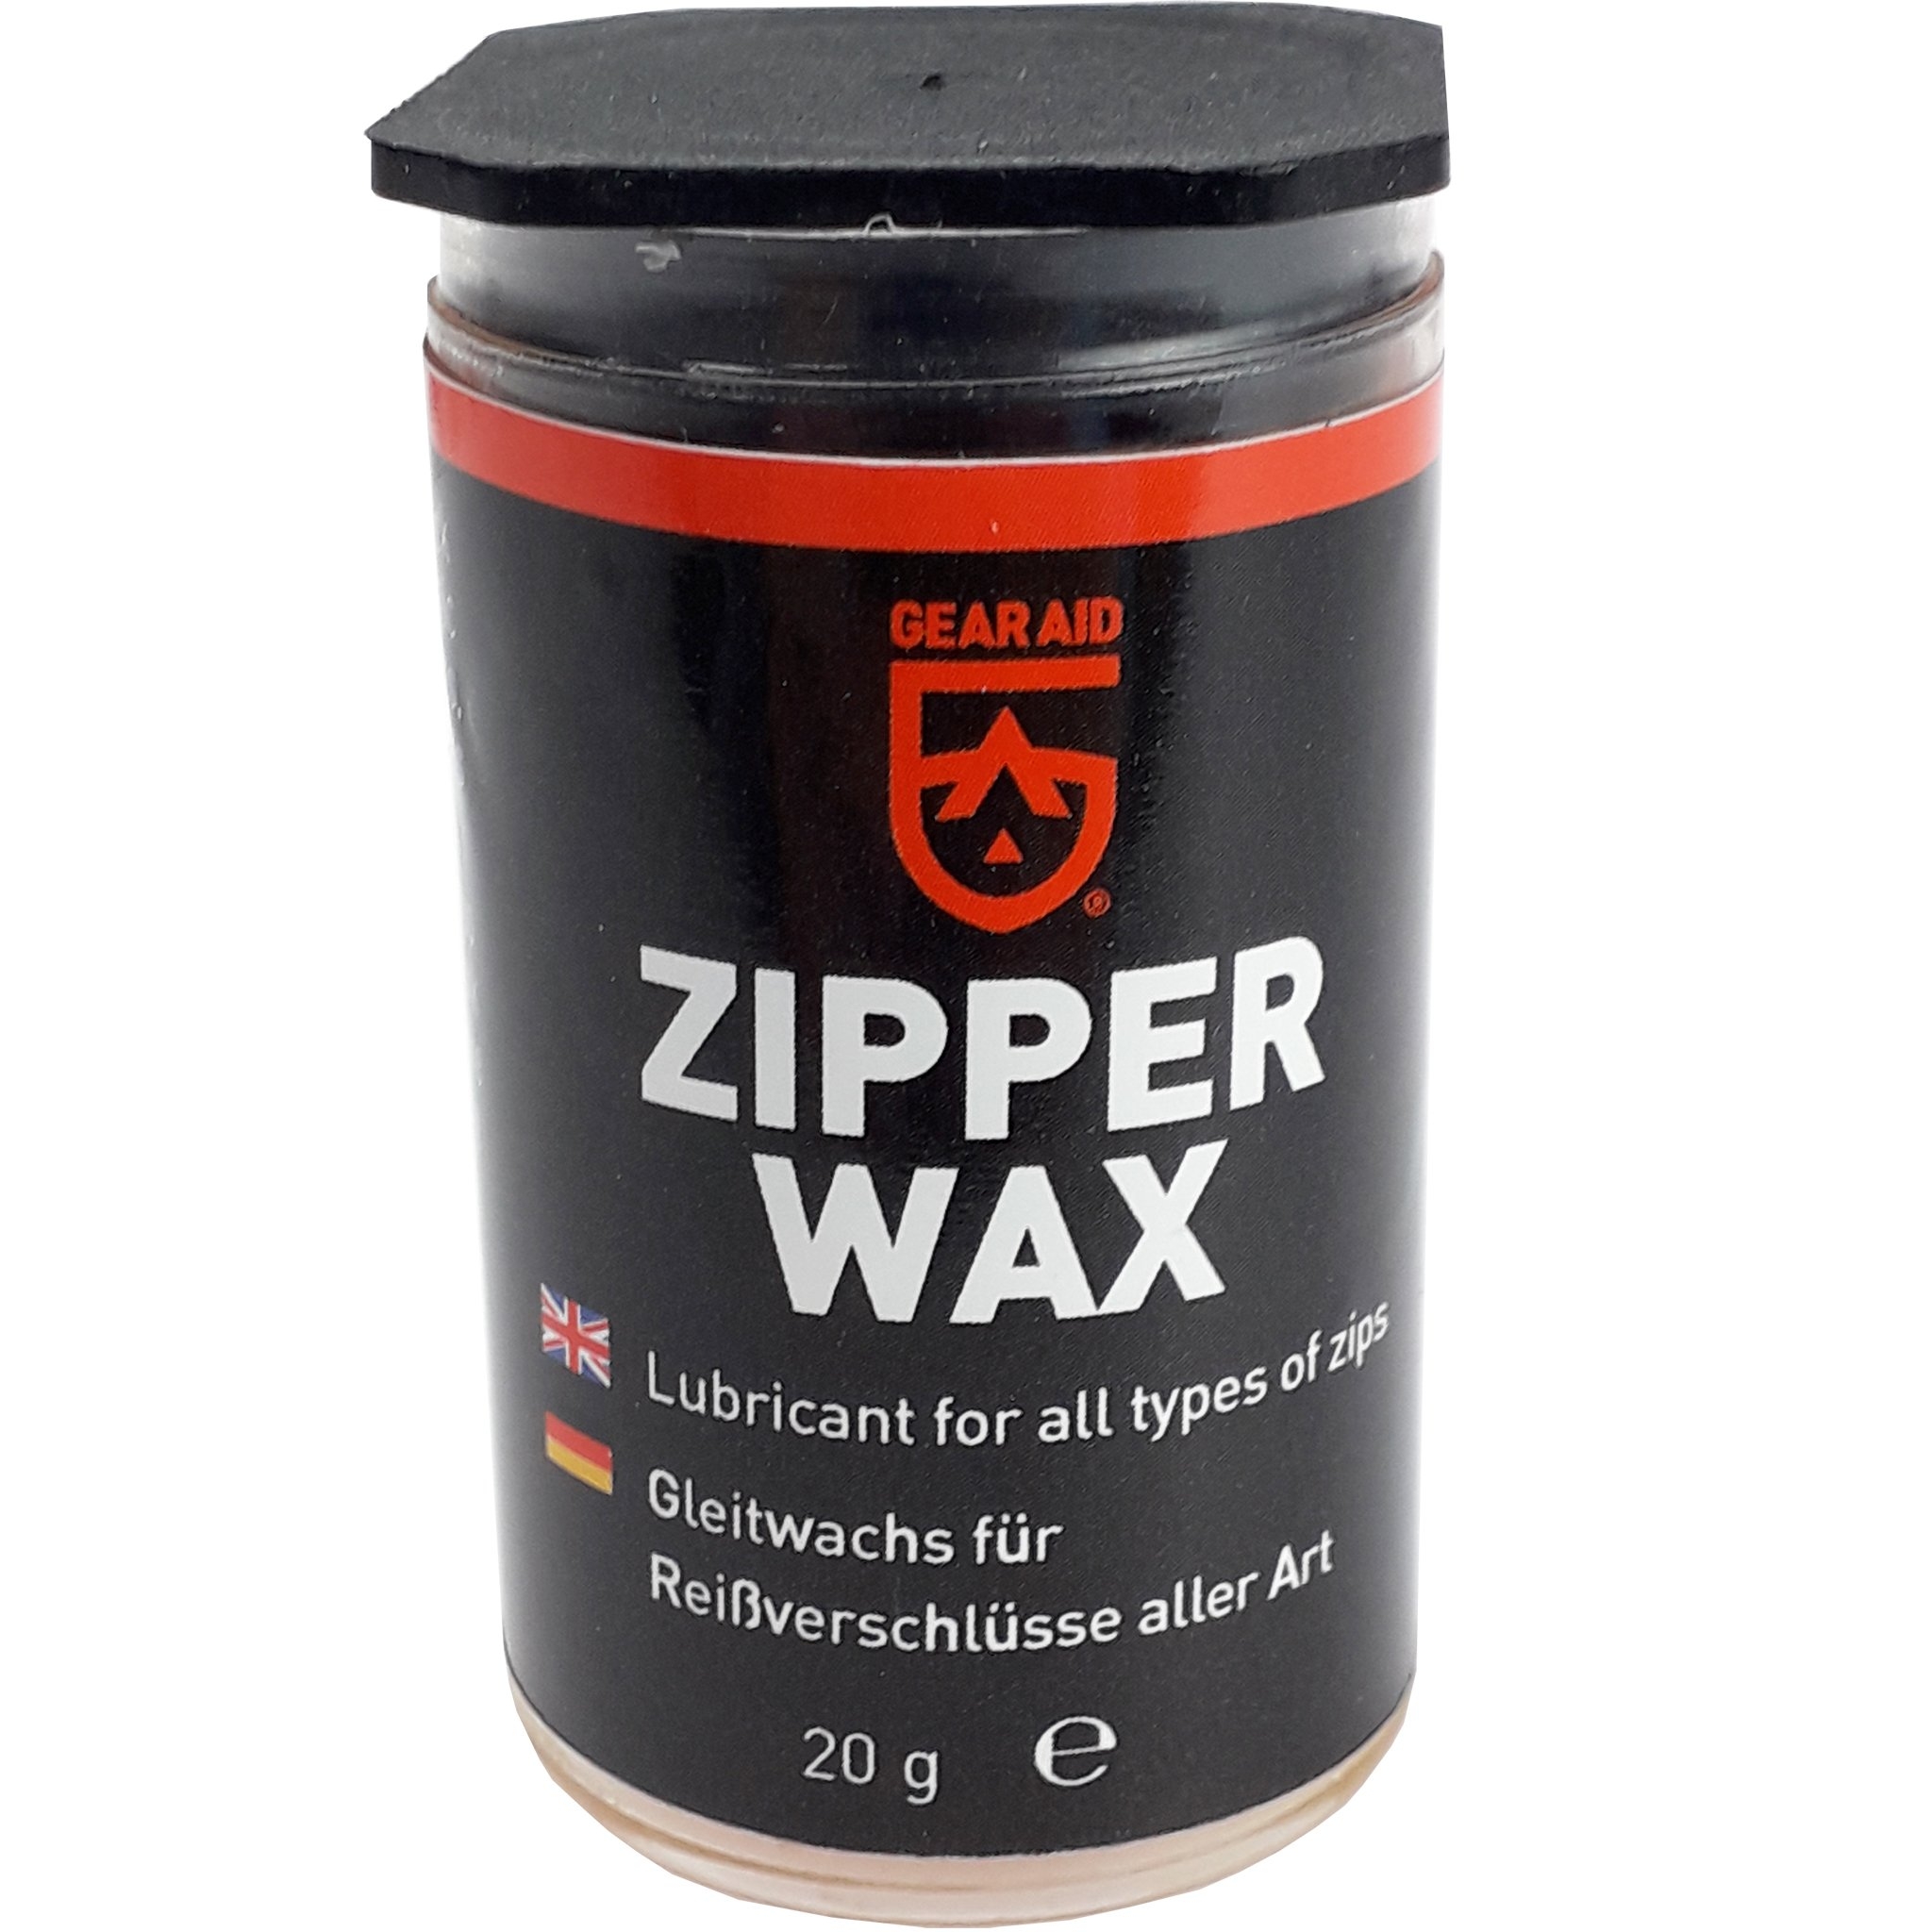 Gear Aid Max Wax Zipper Lubricant by McNett